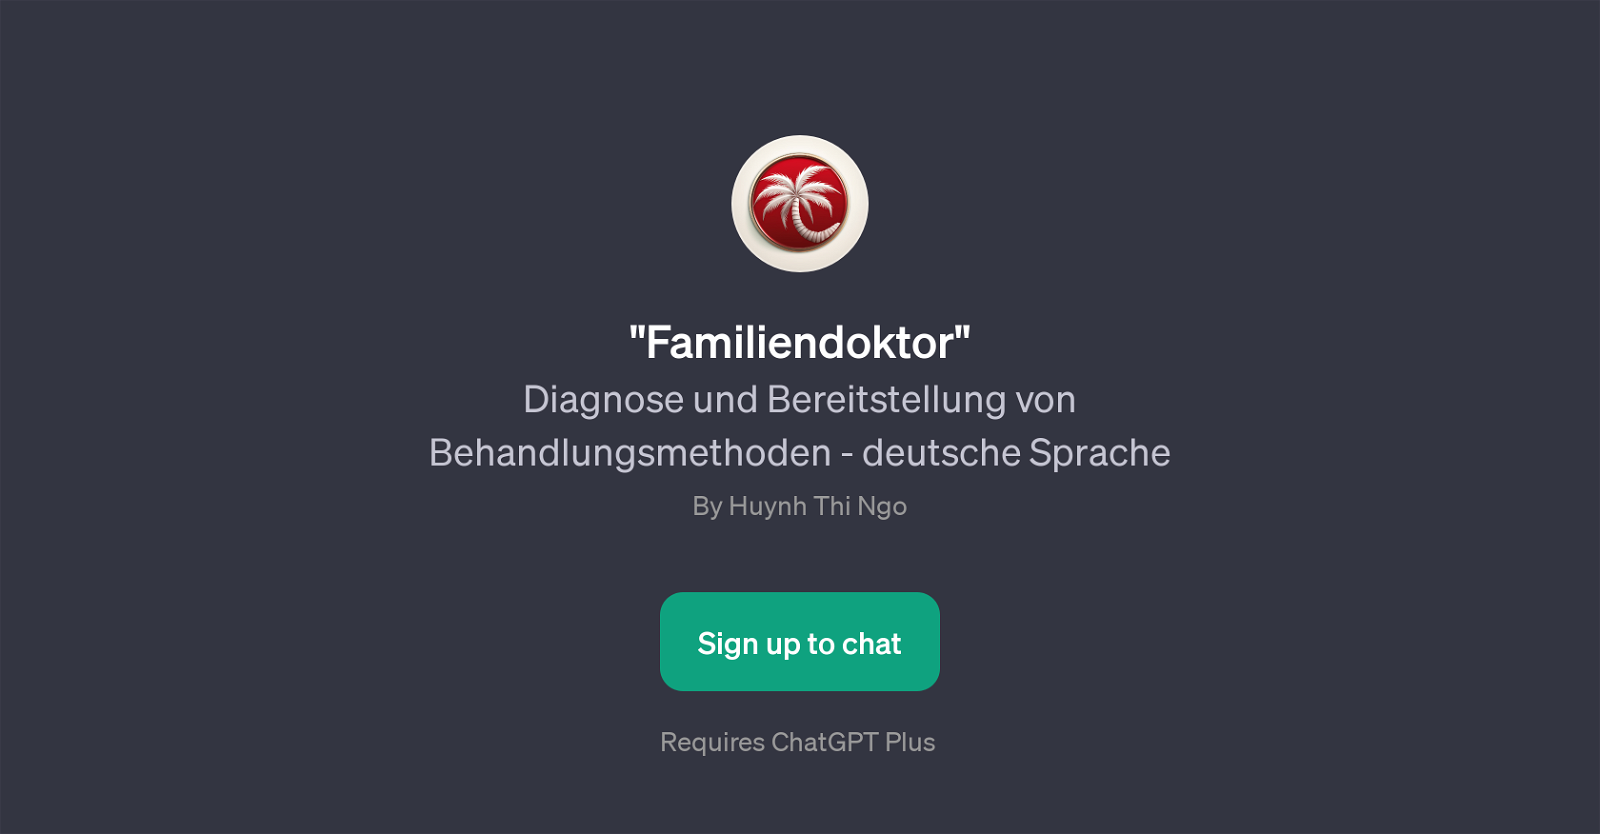 Familiendoktor website